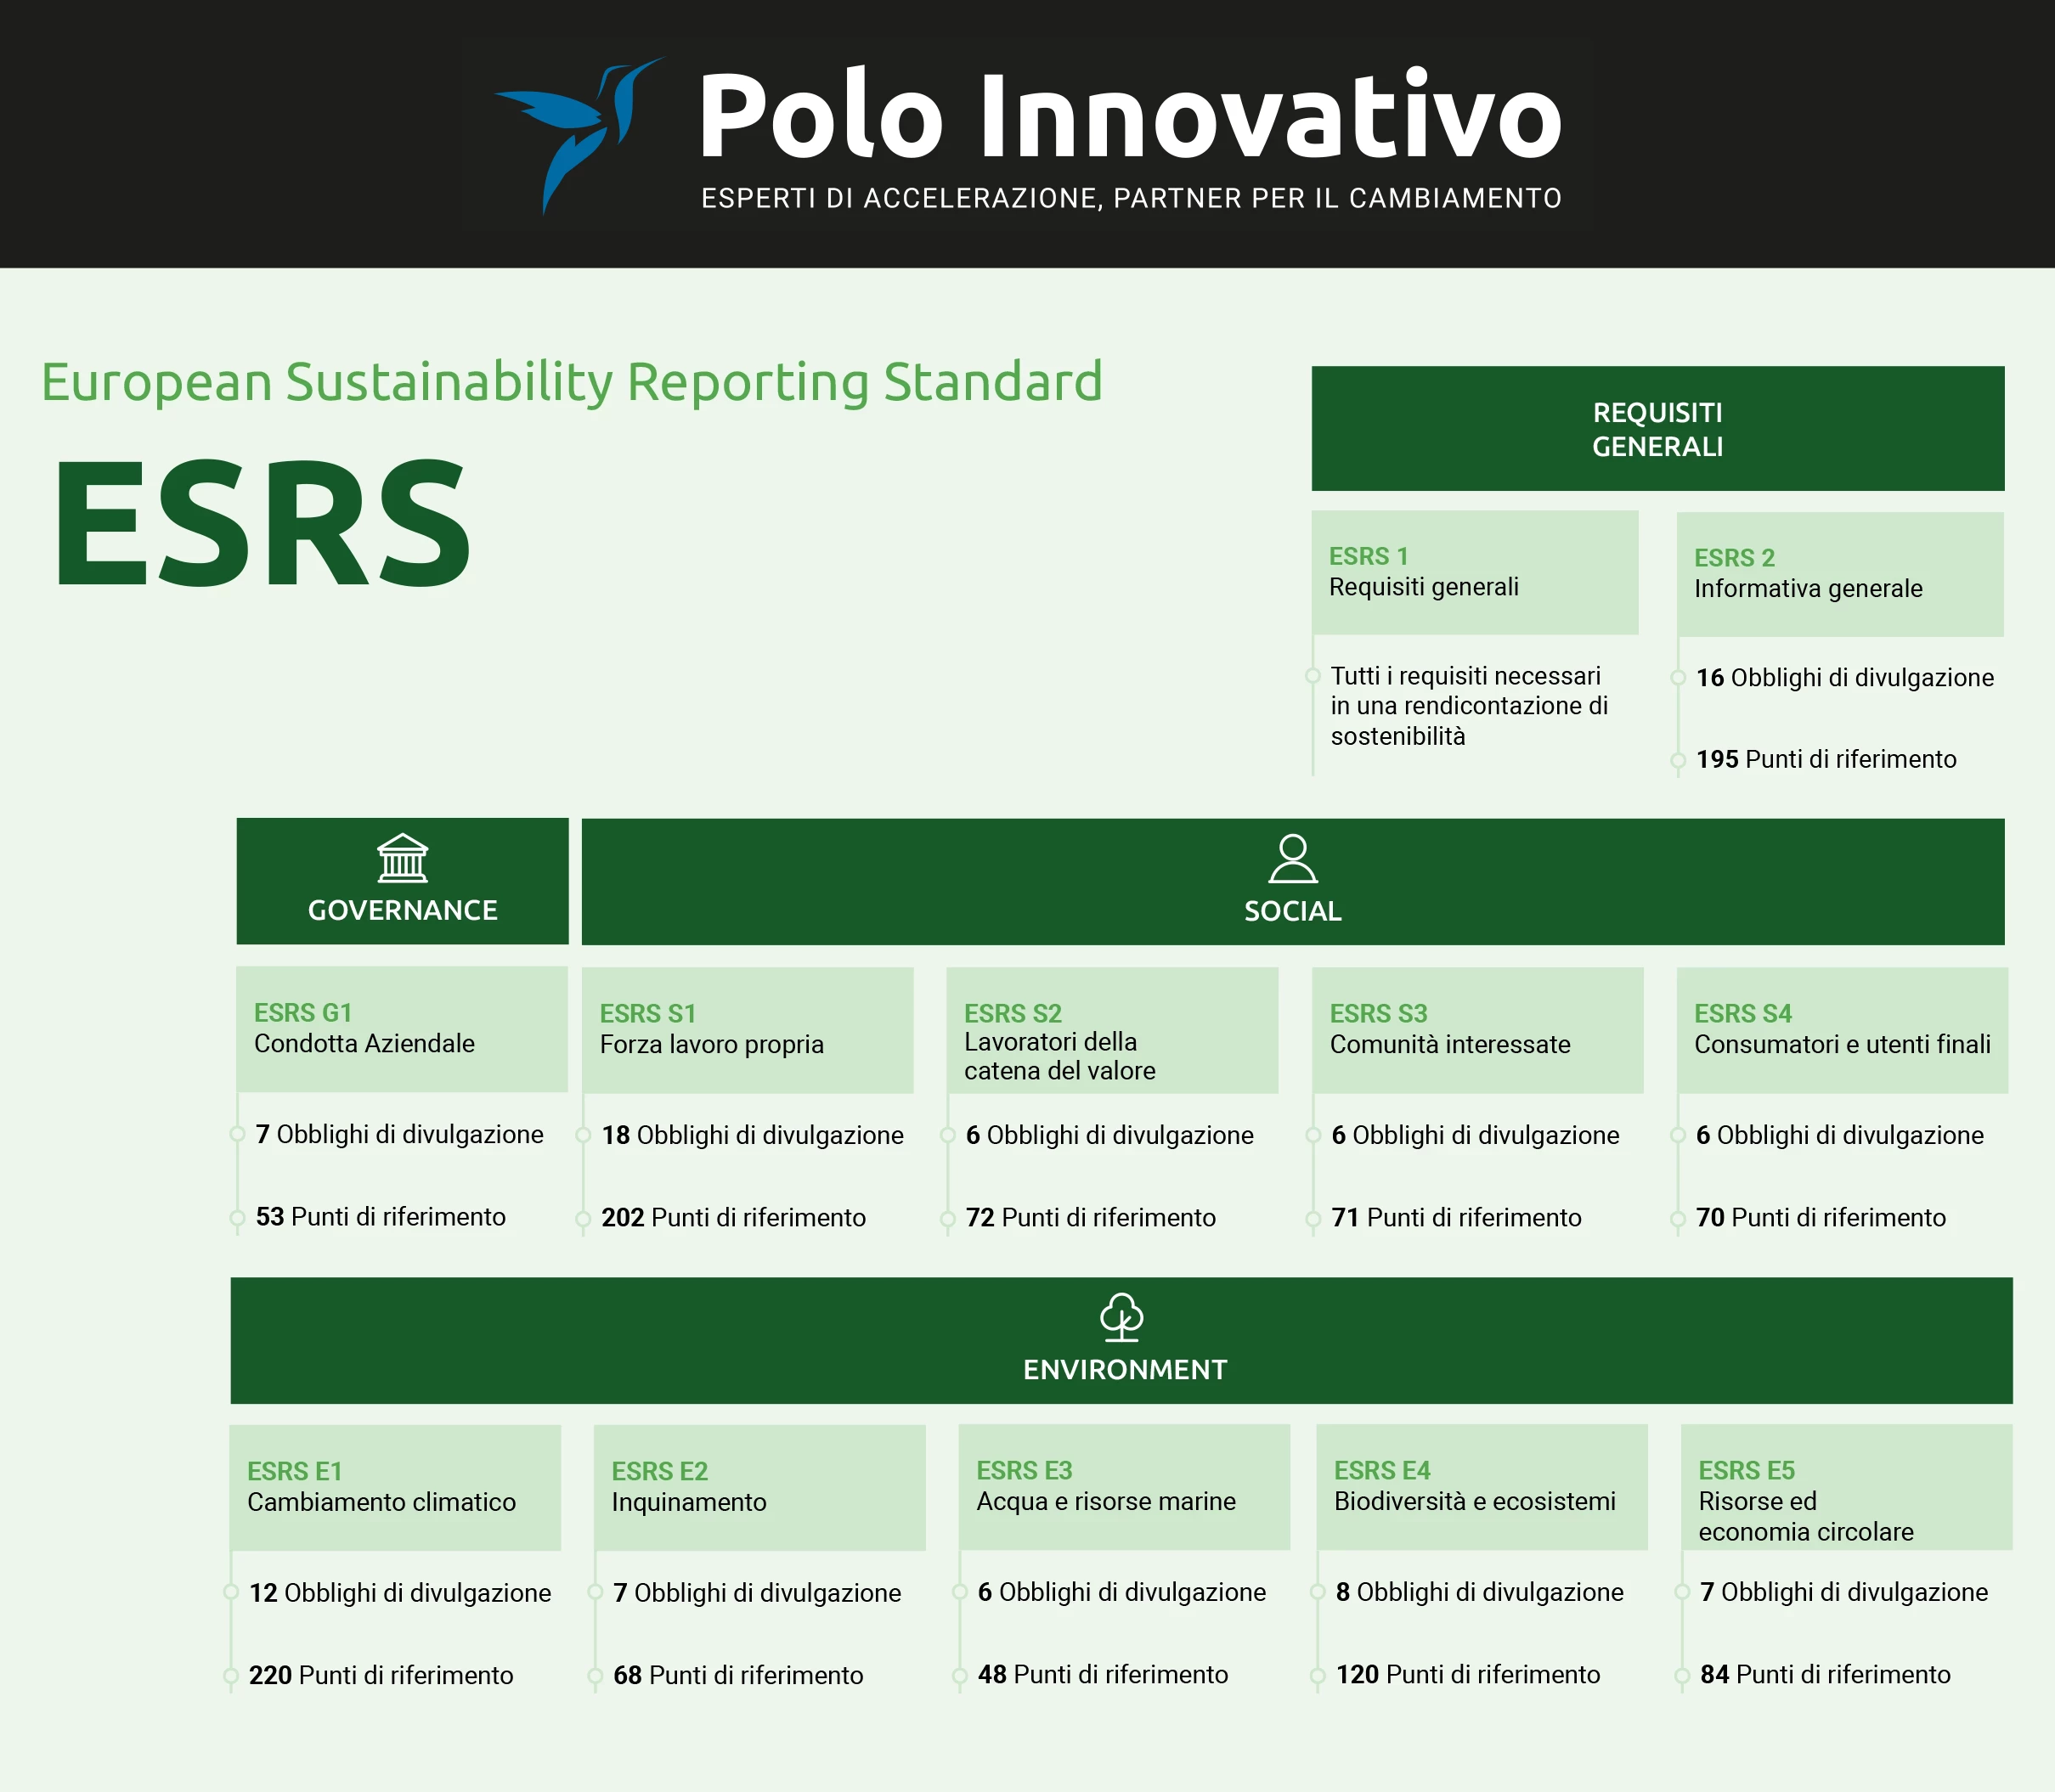 ESRS dettagli dei singoli 12 standards - Polo Innovativo